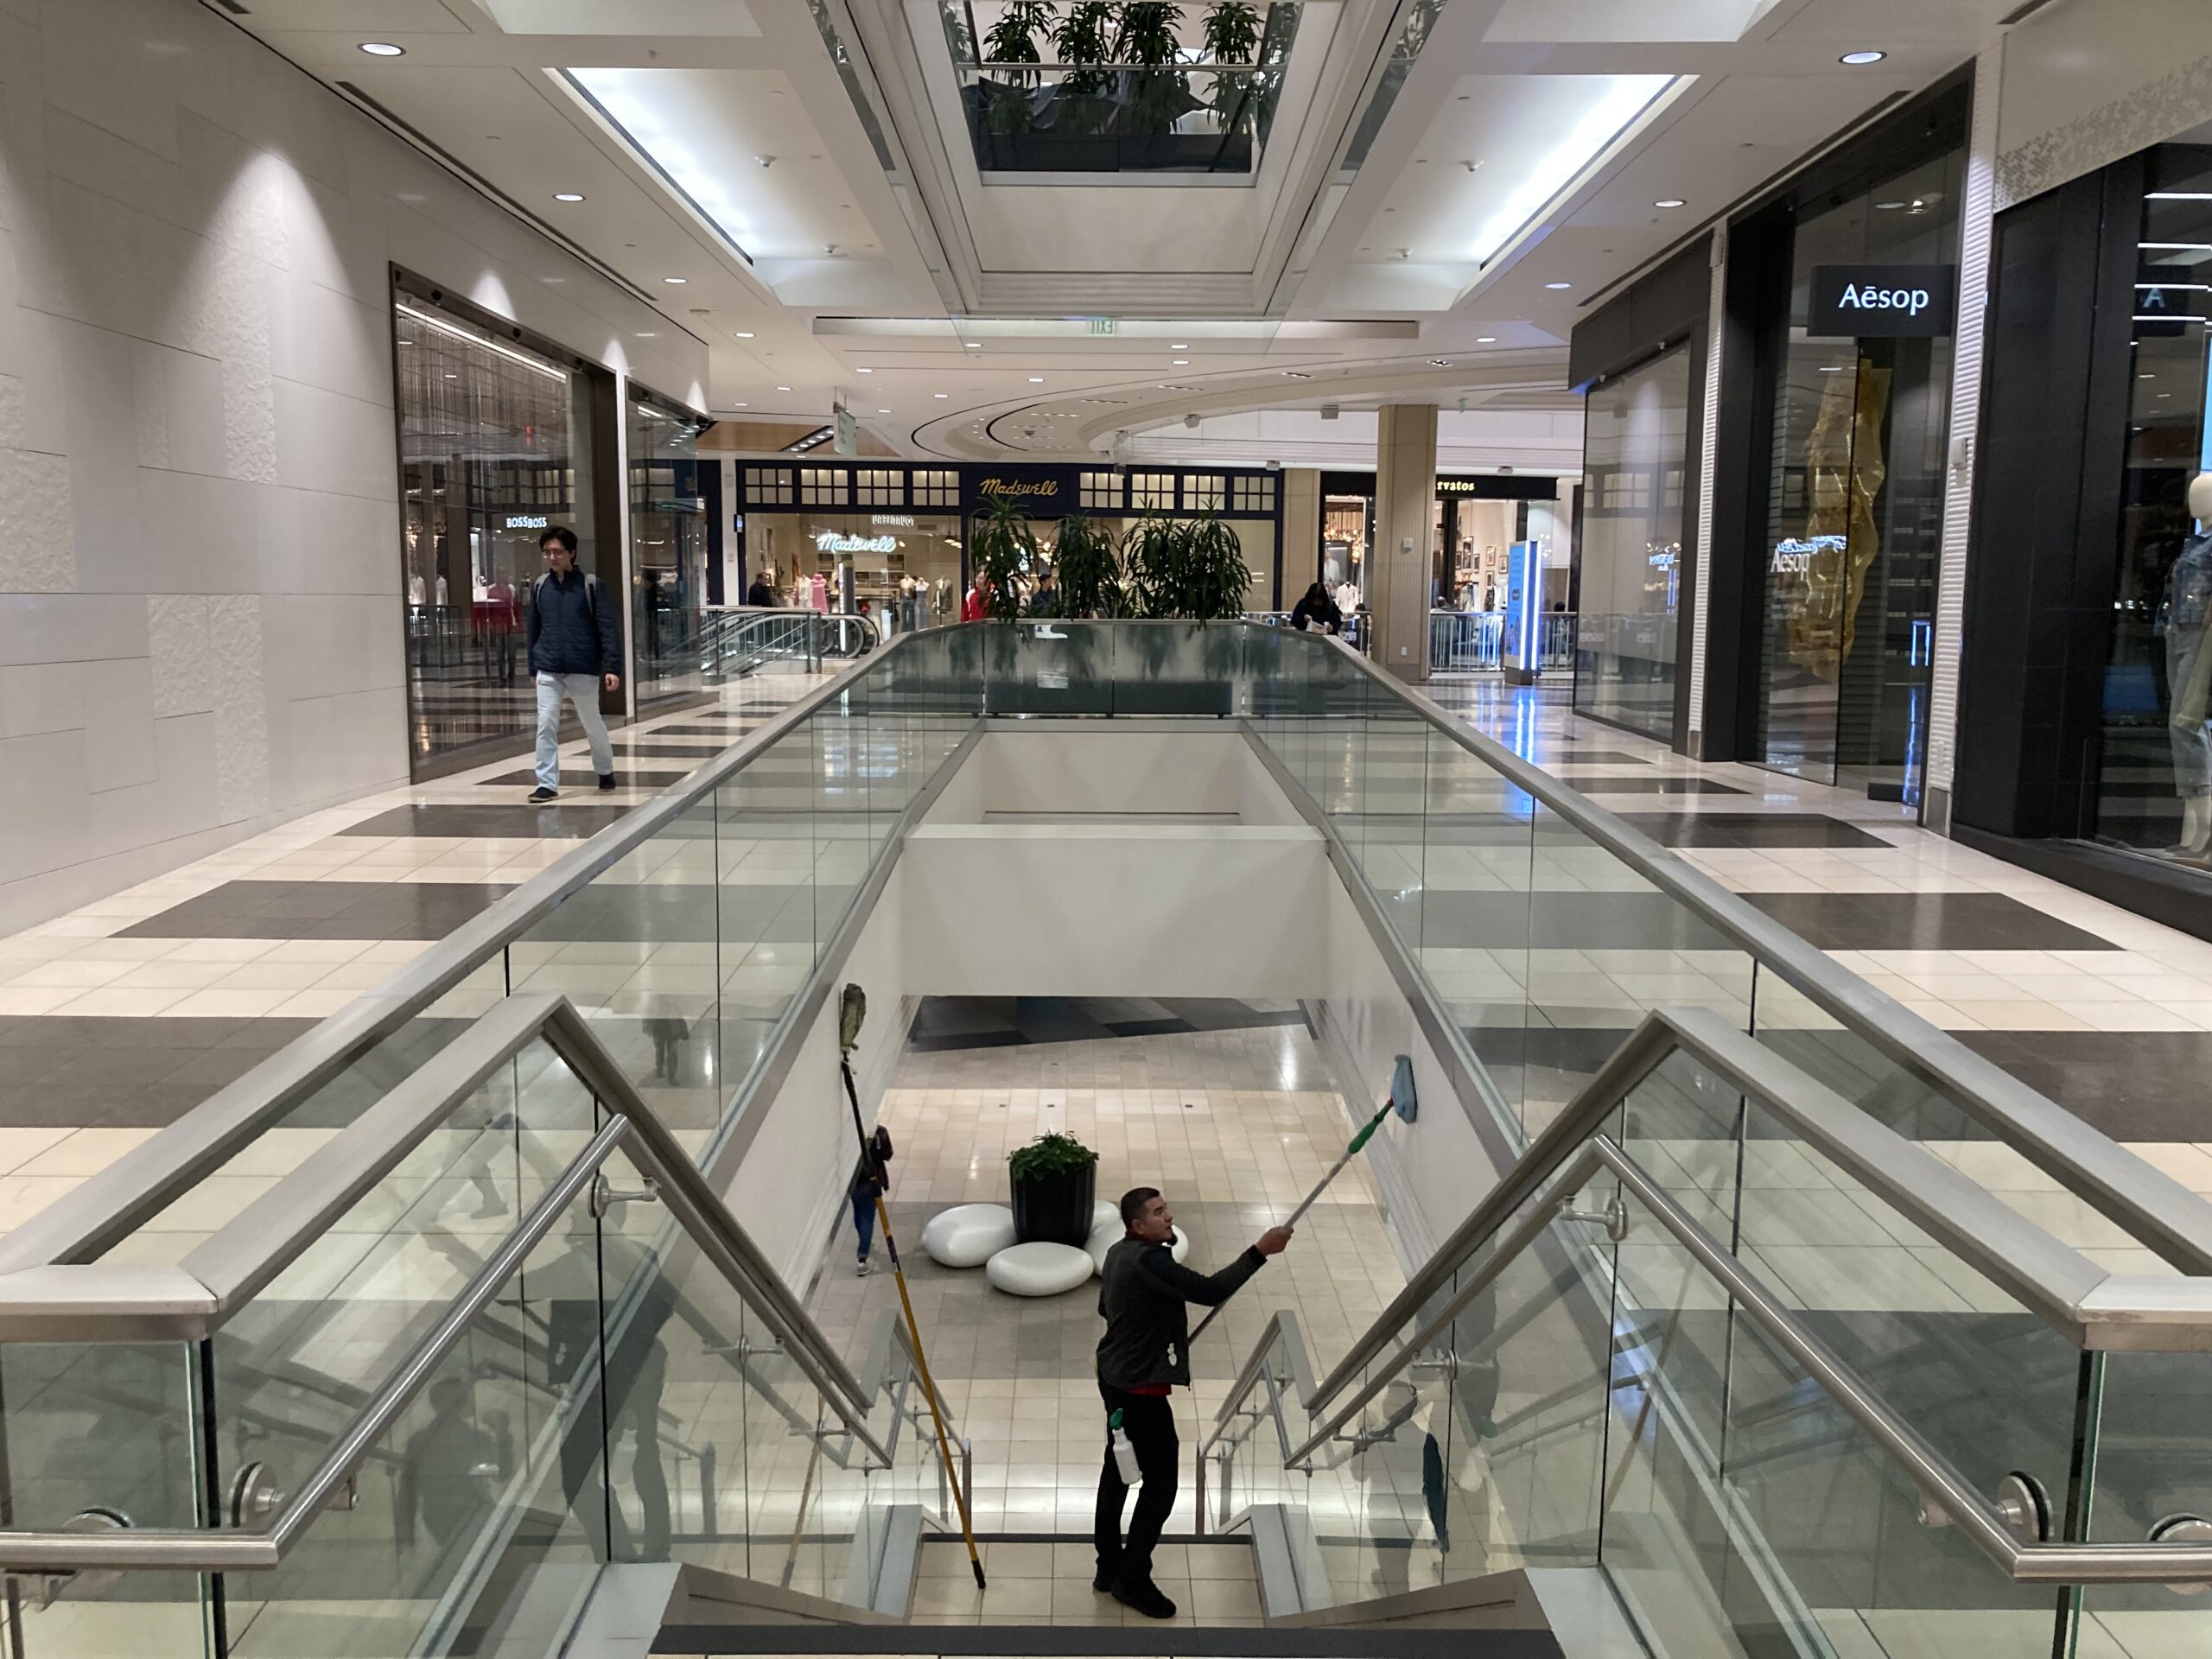 Westfield Shopping Malls in SF, Santa Clara County Reopen – NBC Bay Area